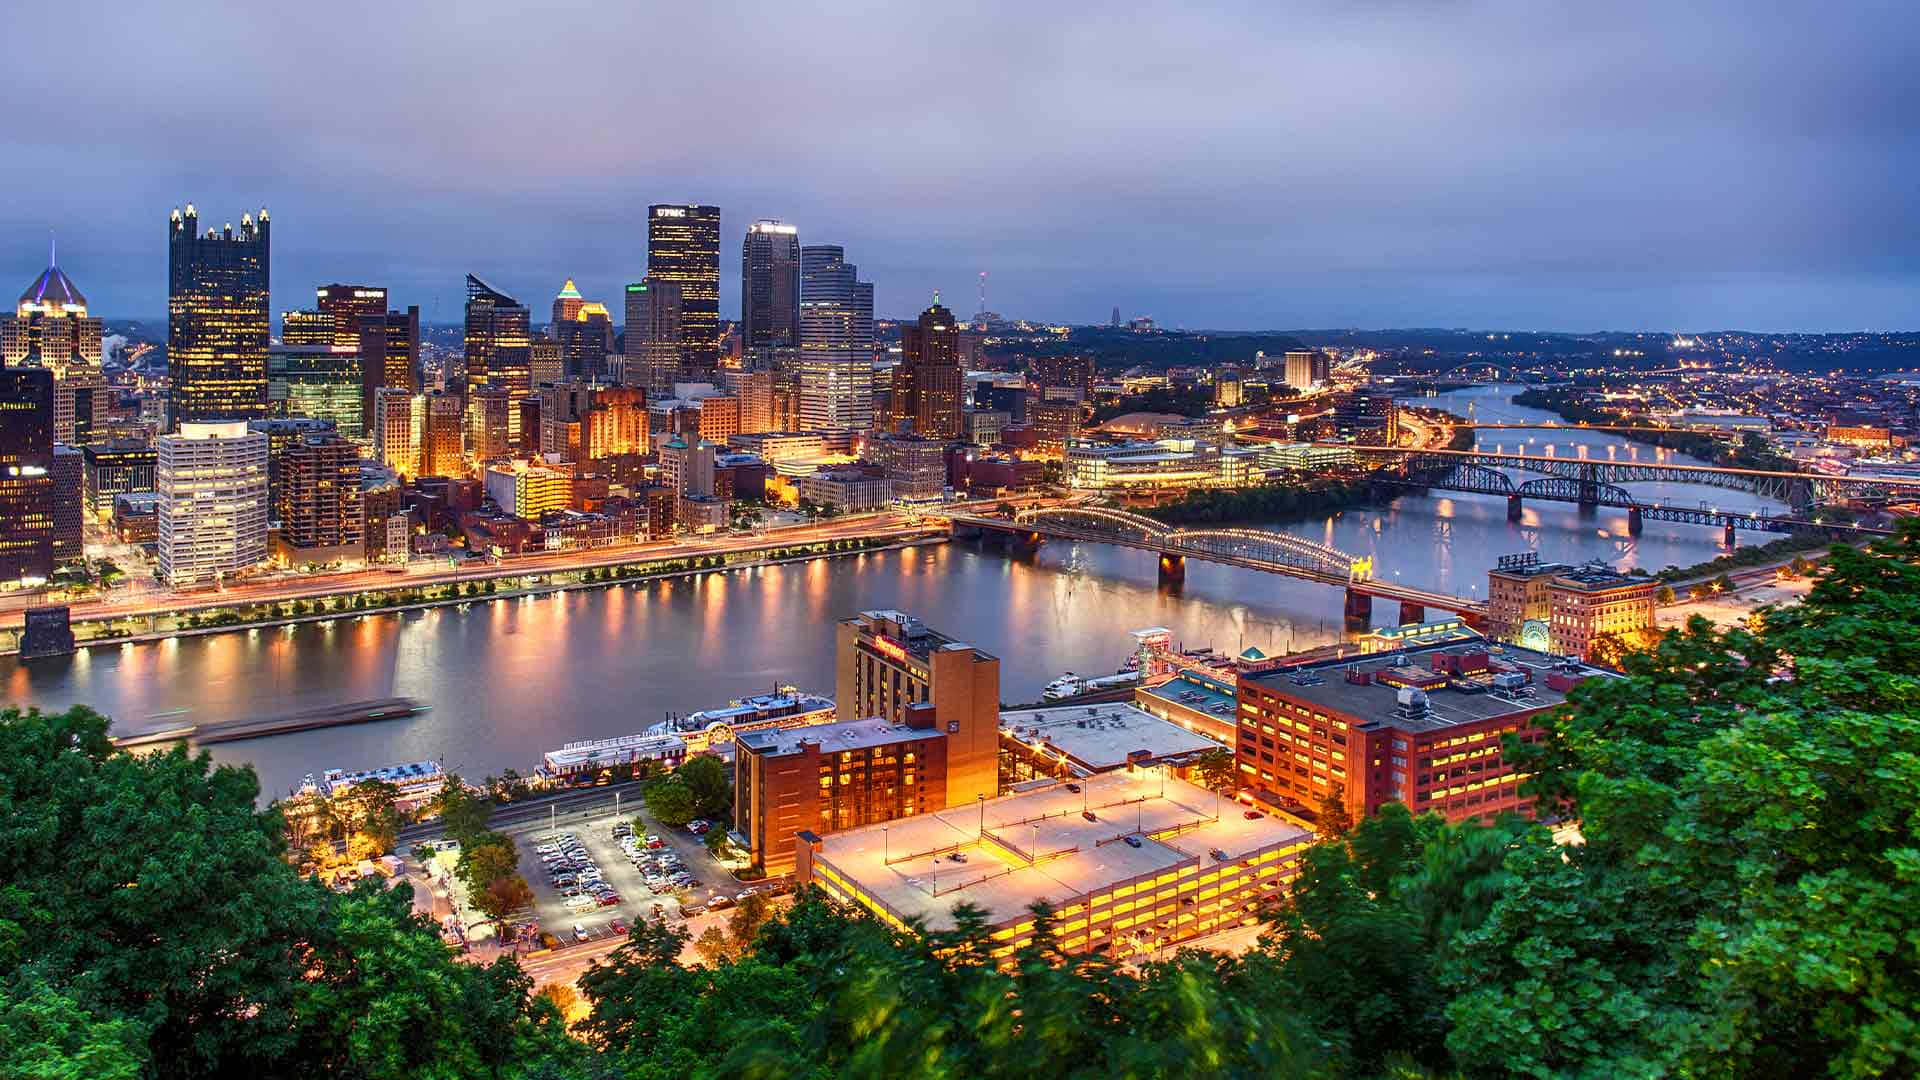 Panoramadel Horizonte De Pittsburgh Con Varios Puentes. Fondo de pantalla